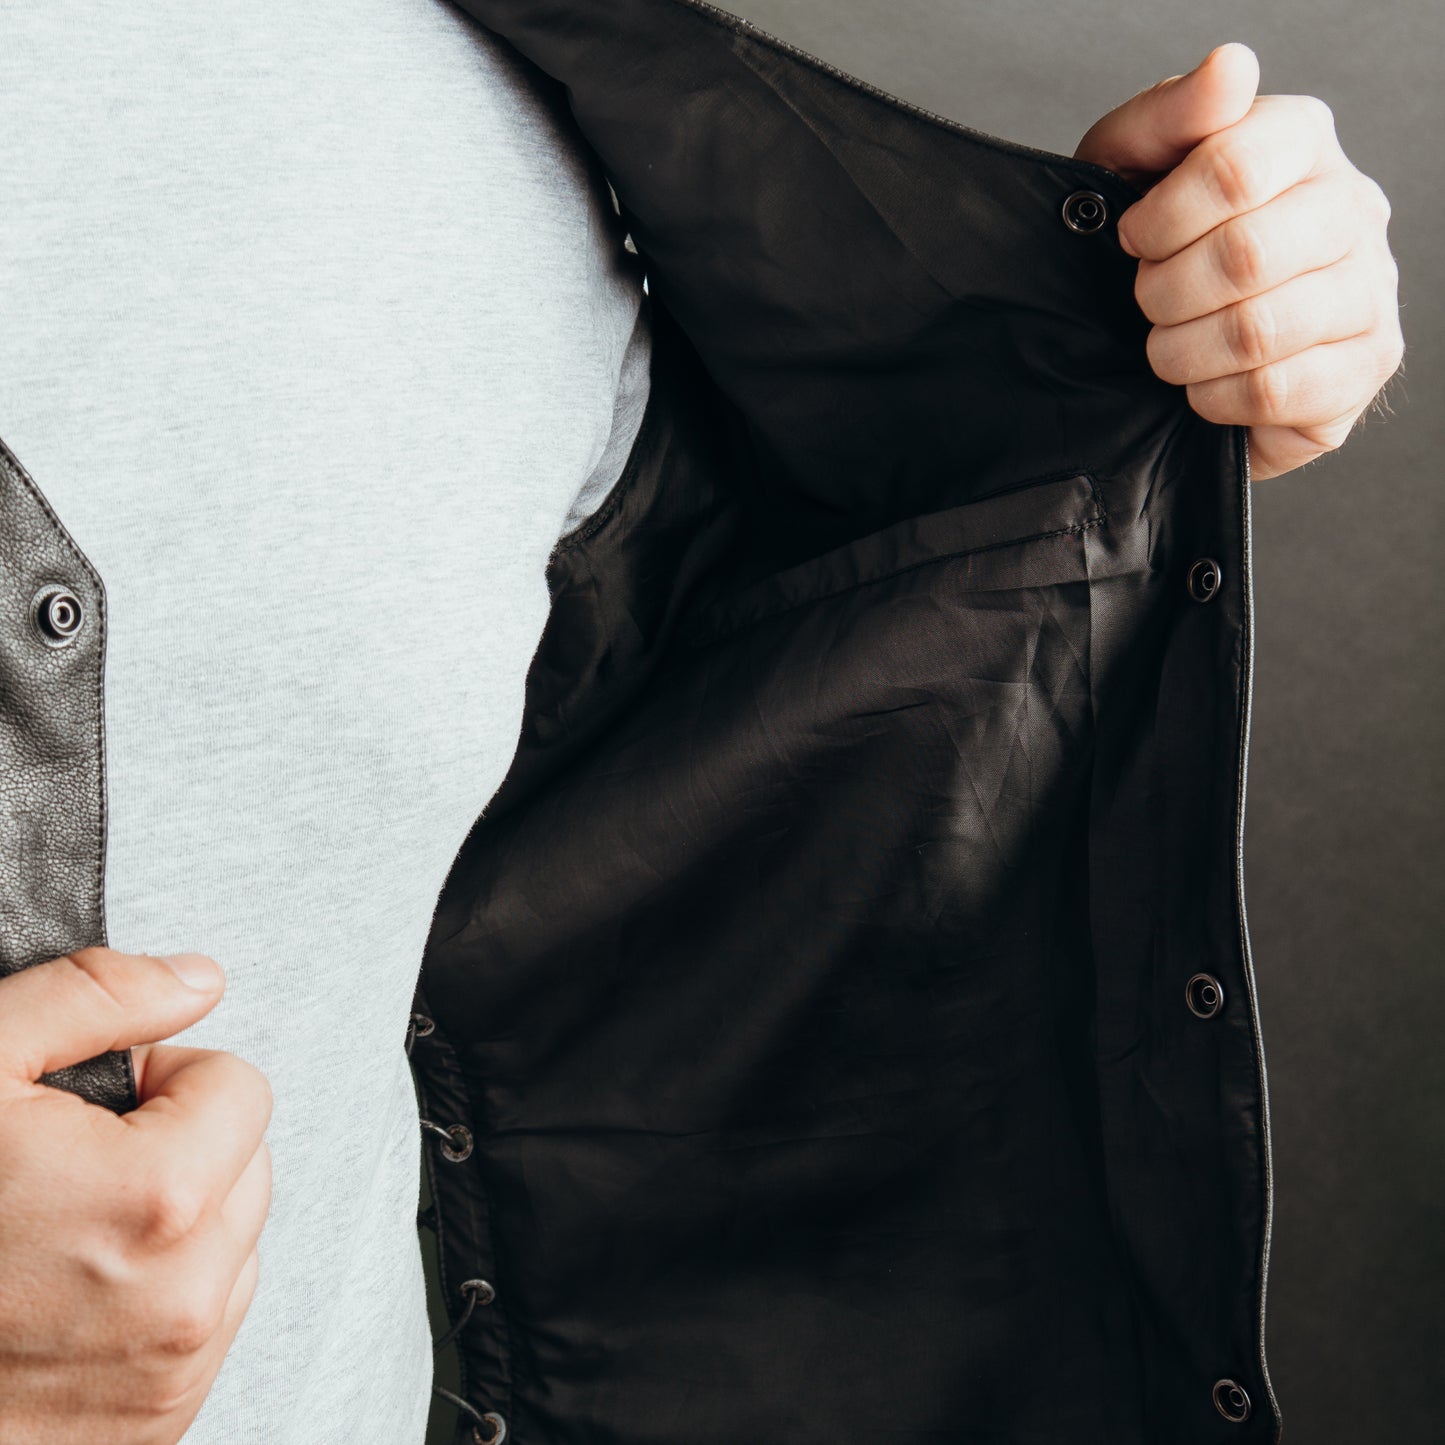 The Walking Dead Daryl Dixon Replica Leather Vest